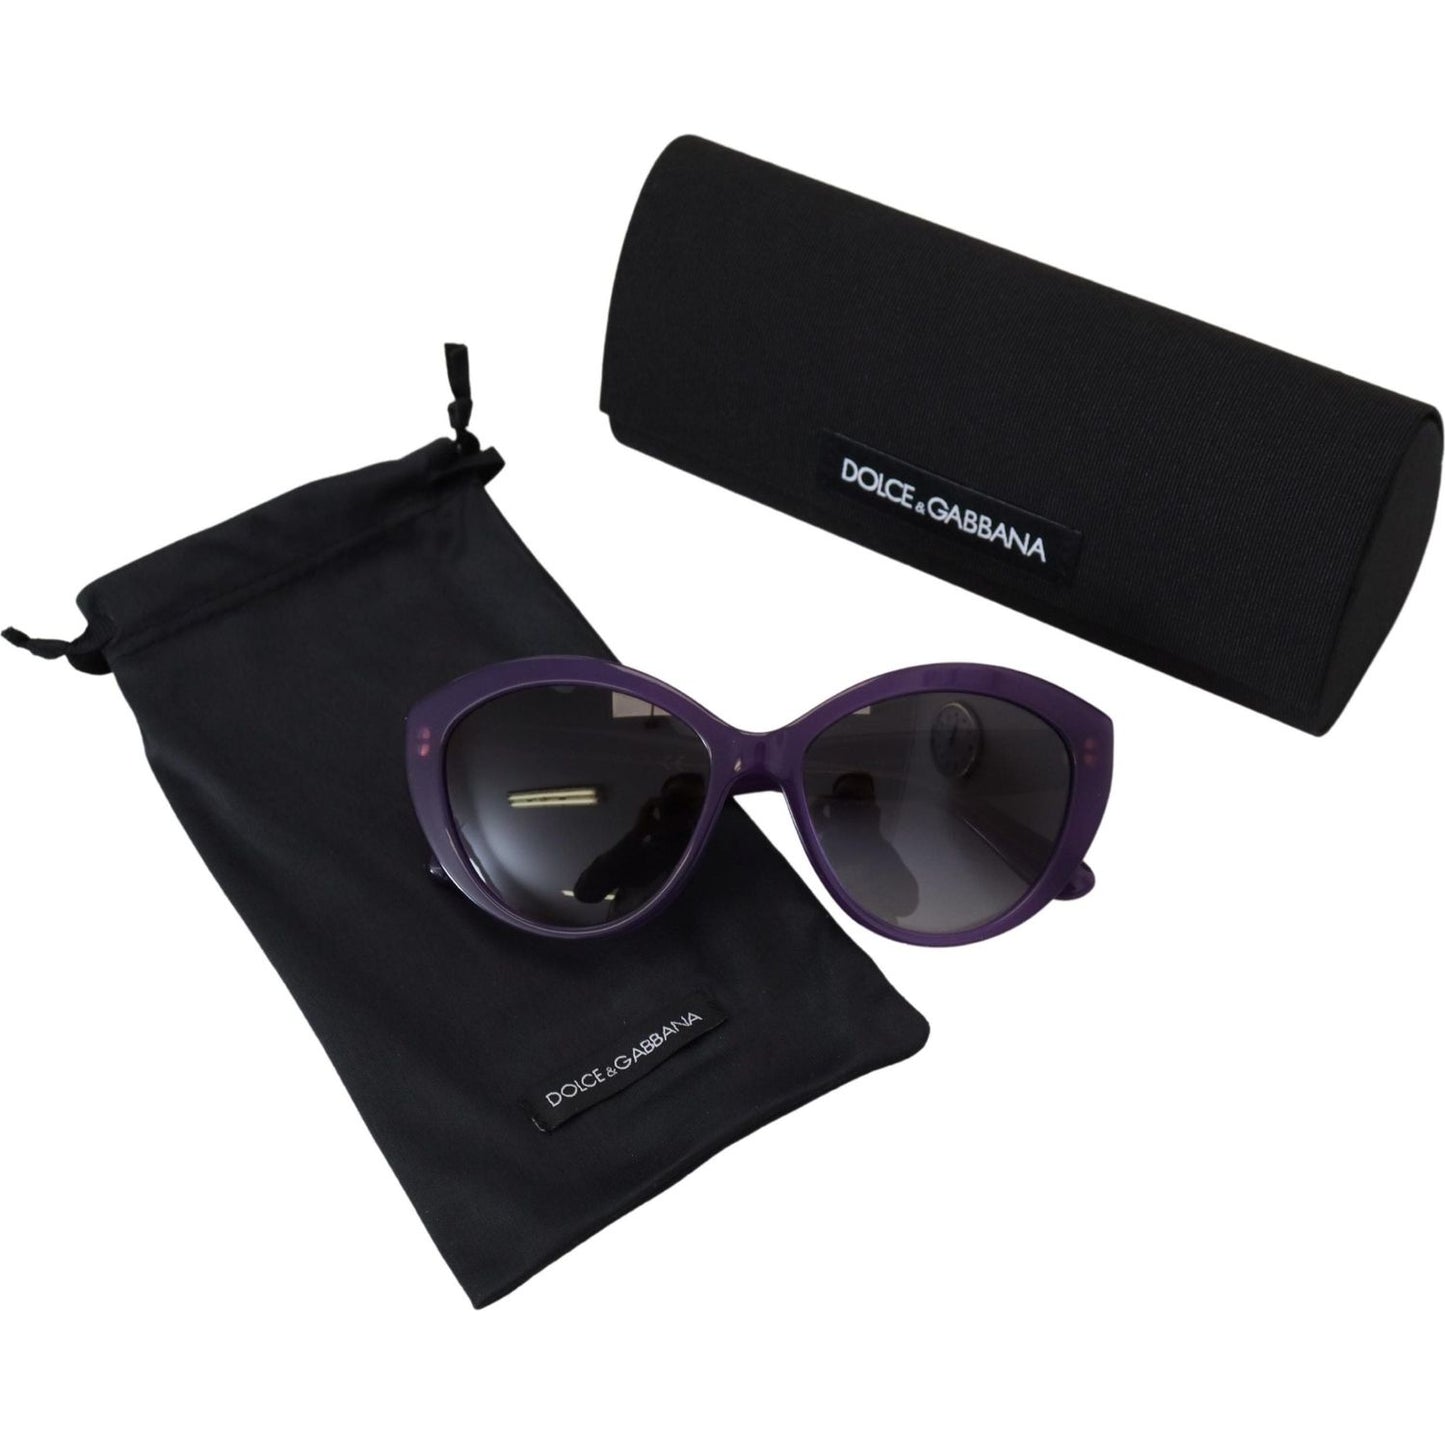 Dolce & Gabbana Chic Purple Cat-Eye Designer Sunglasses purple-translucent-cat-eye-frame-dg4239-sunglasses